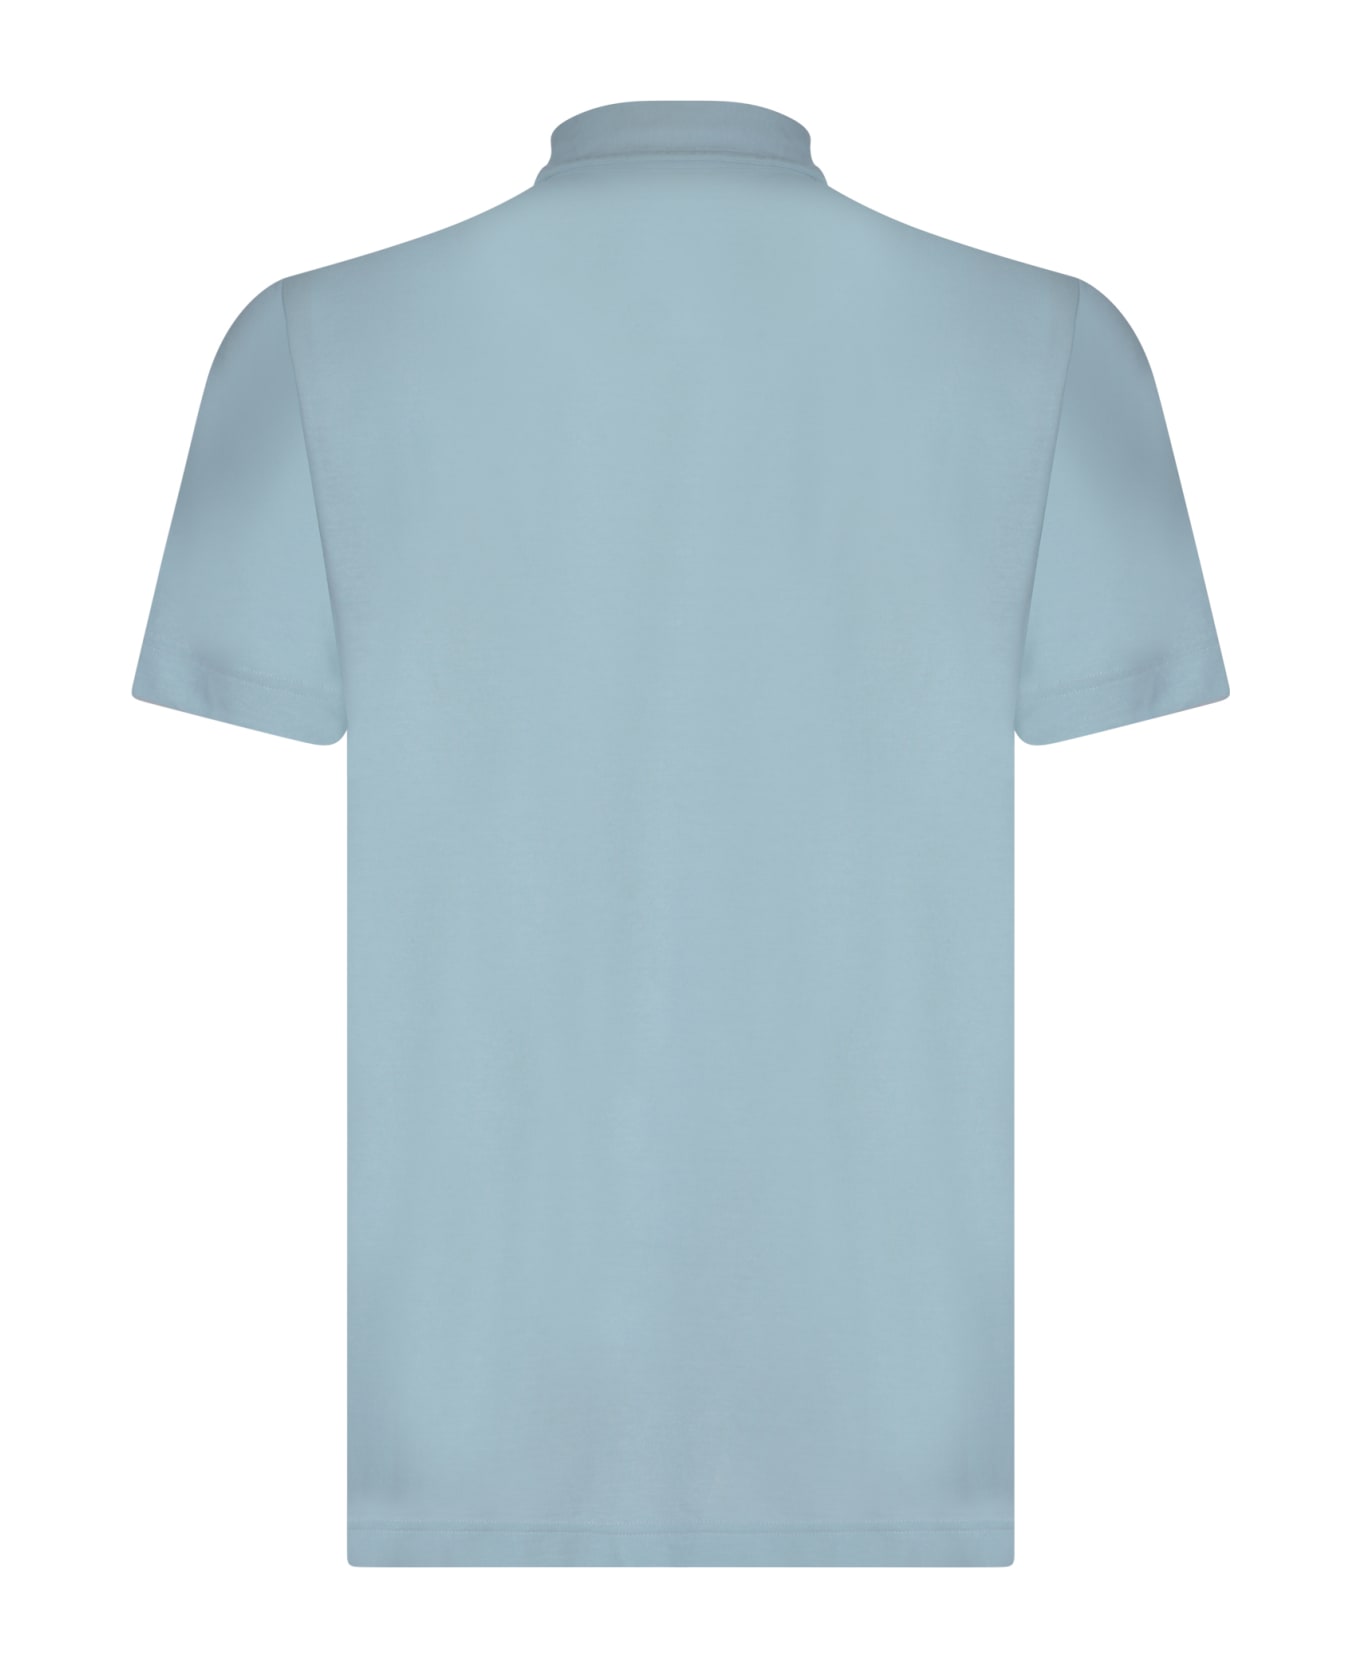 Zanone Light Blue Cotton Polo Shirt - Blue